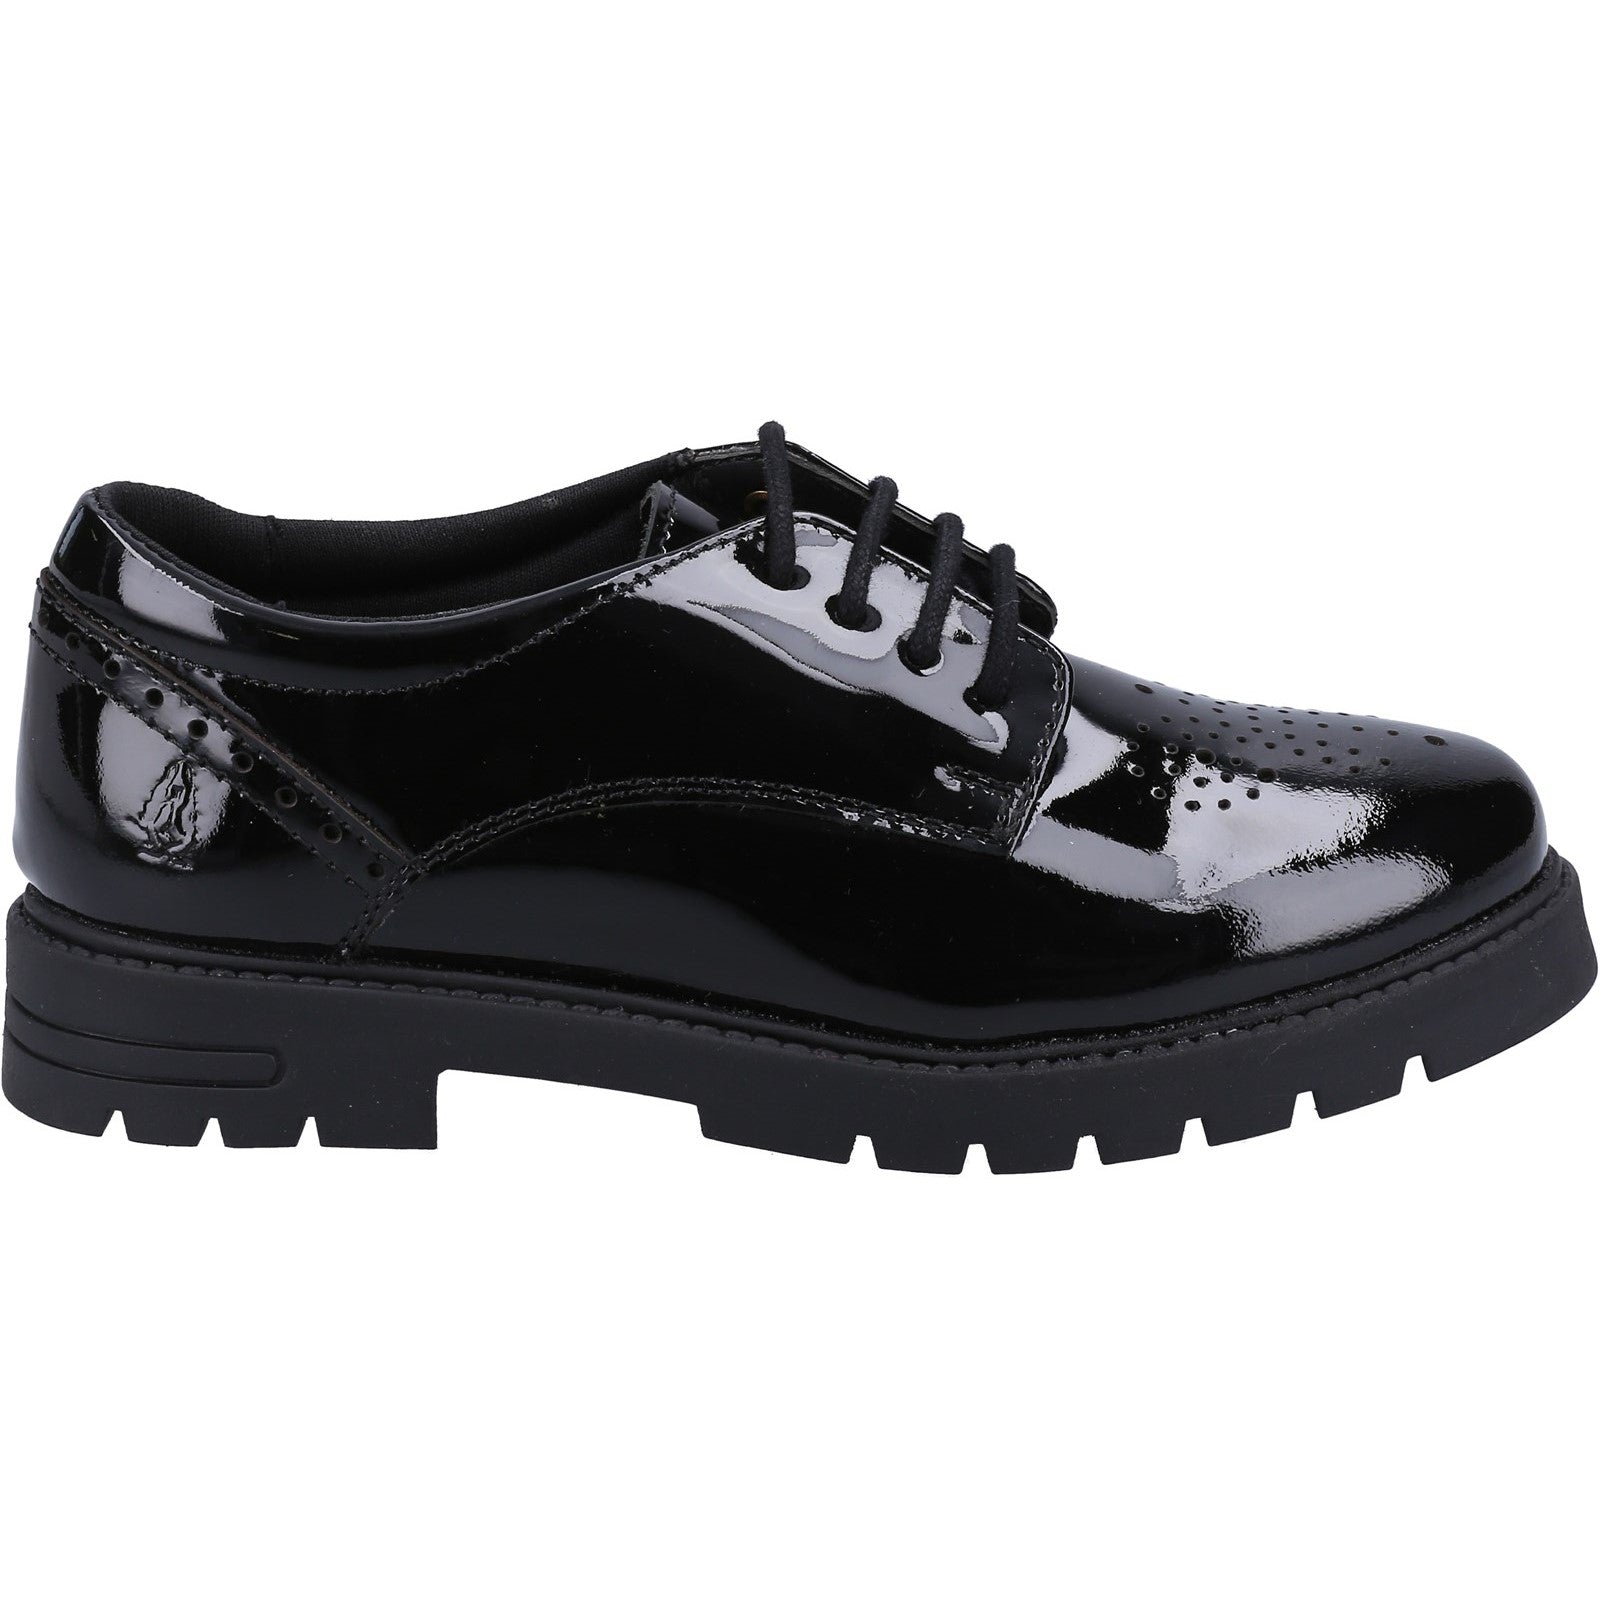 Hush Puppies Girls Jayne Patent Leather School Shoes - Black